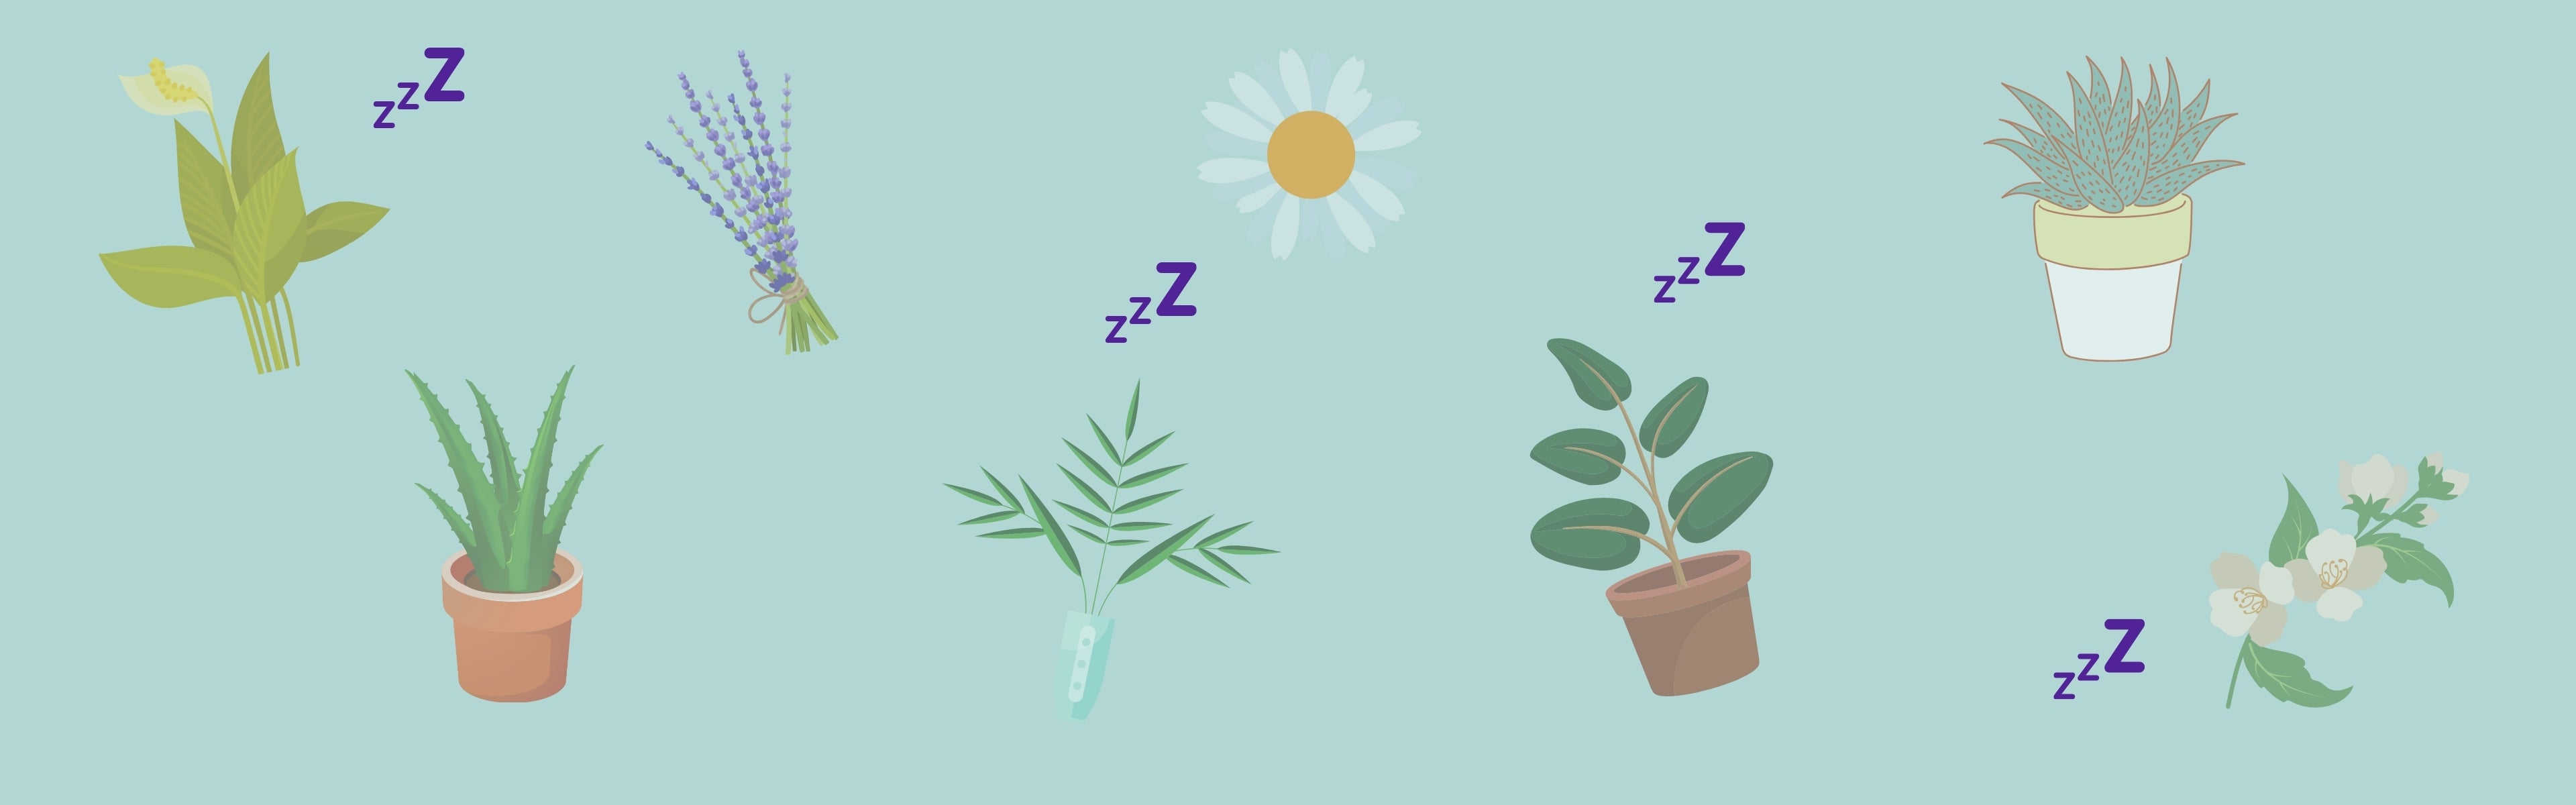 Plants that can help you sleep